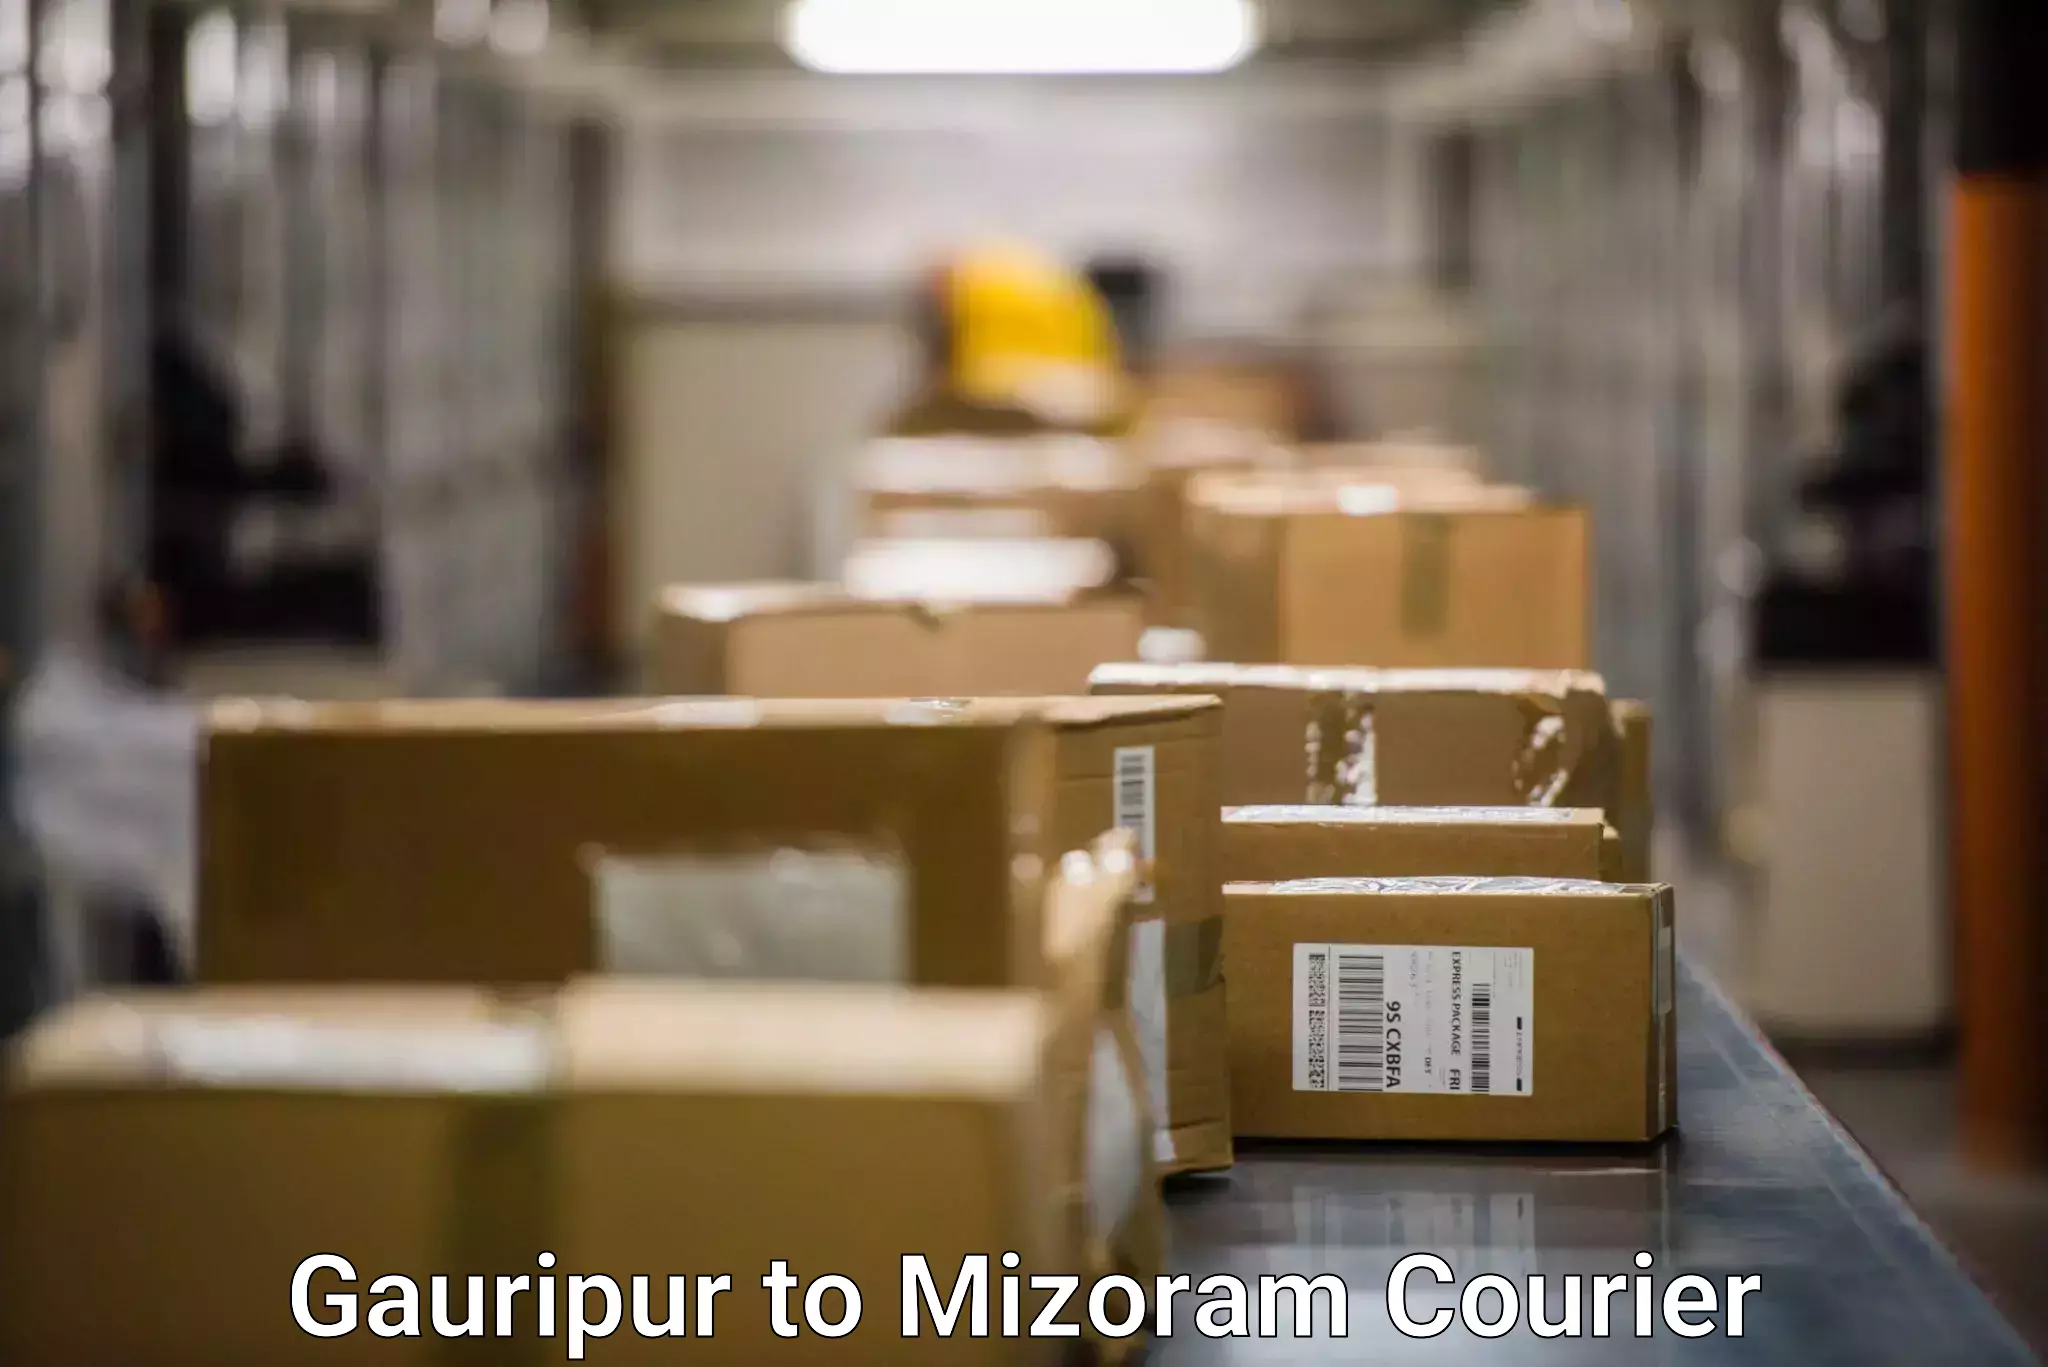 International courier networks Gauripur to Mizoram